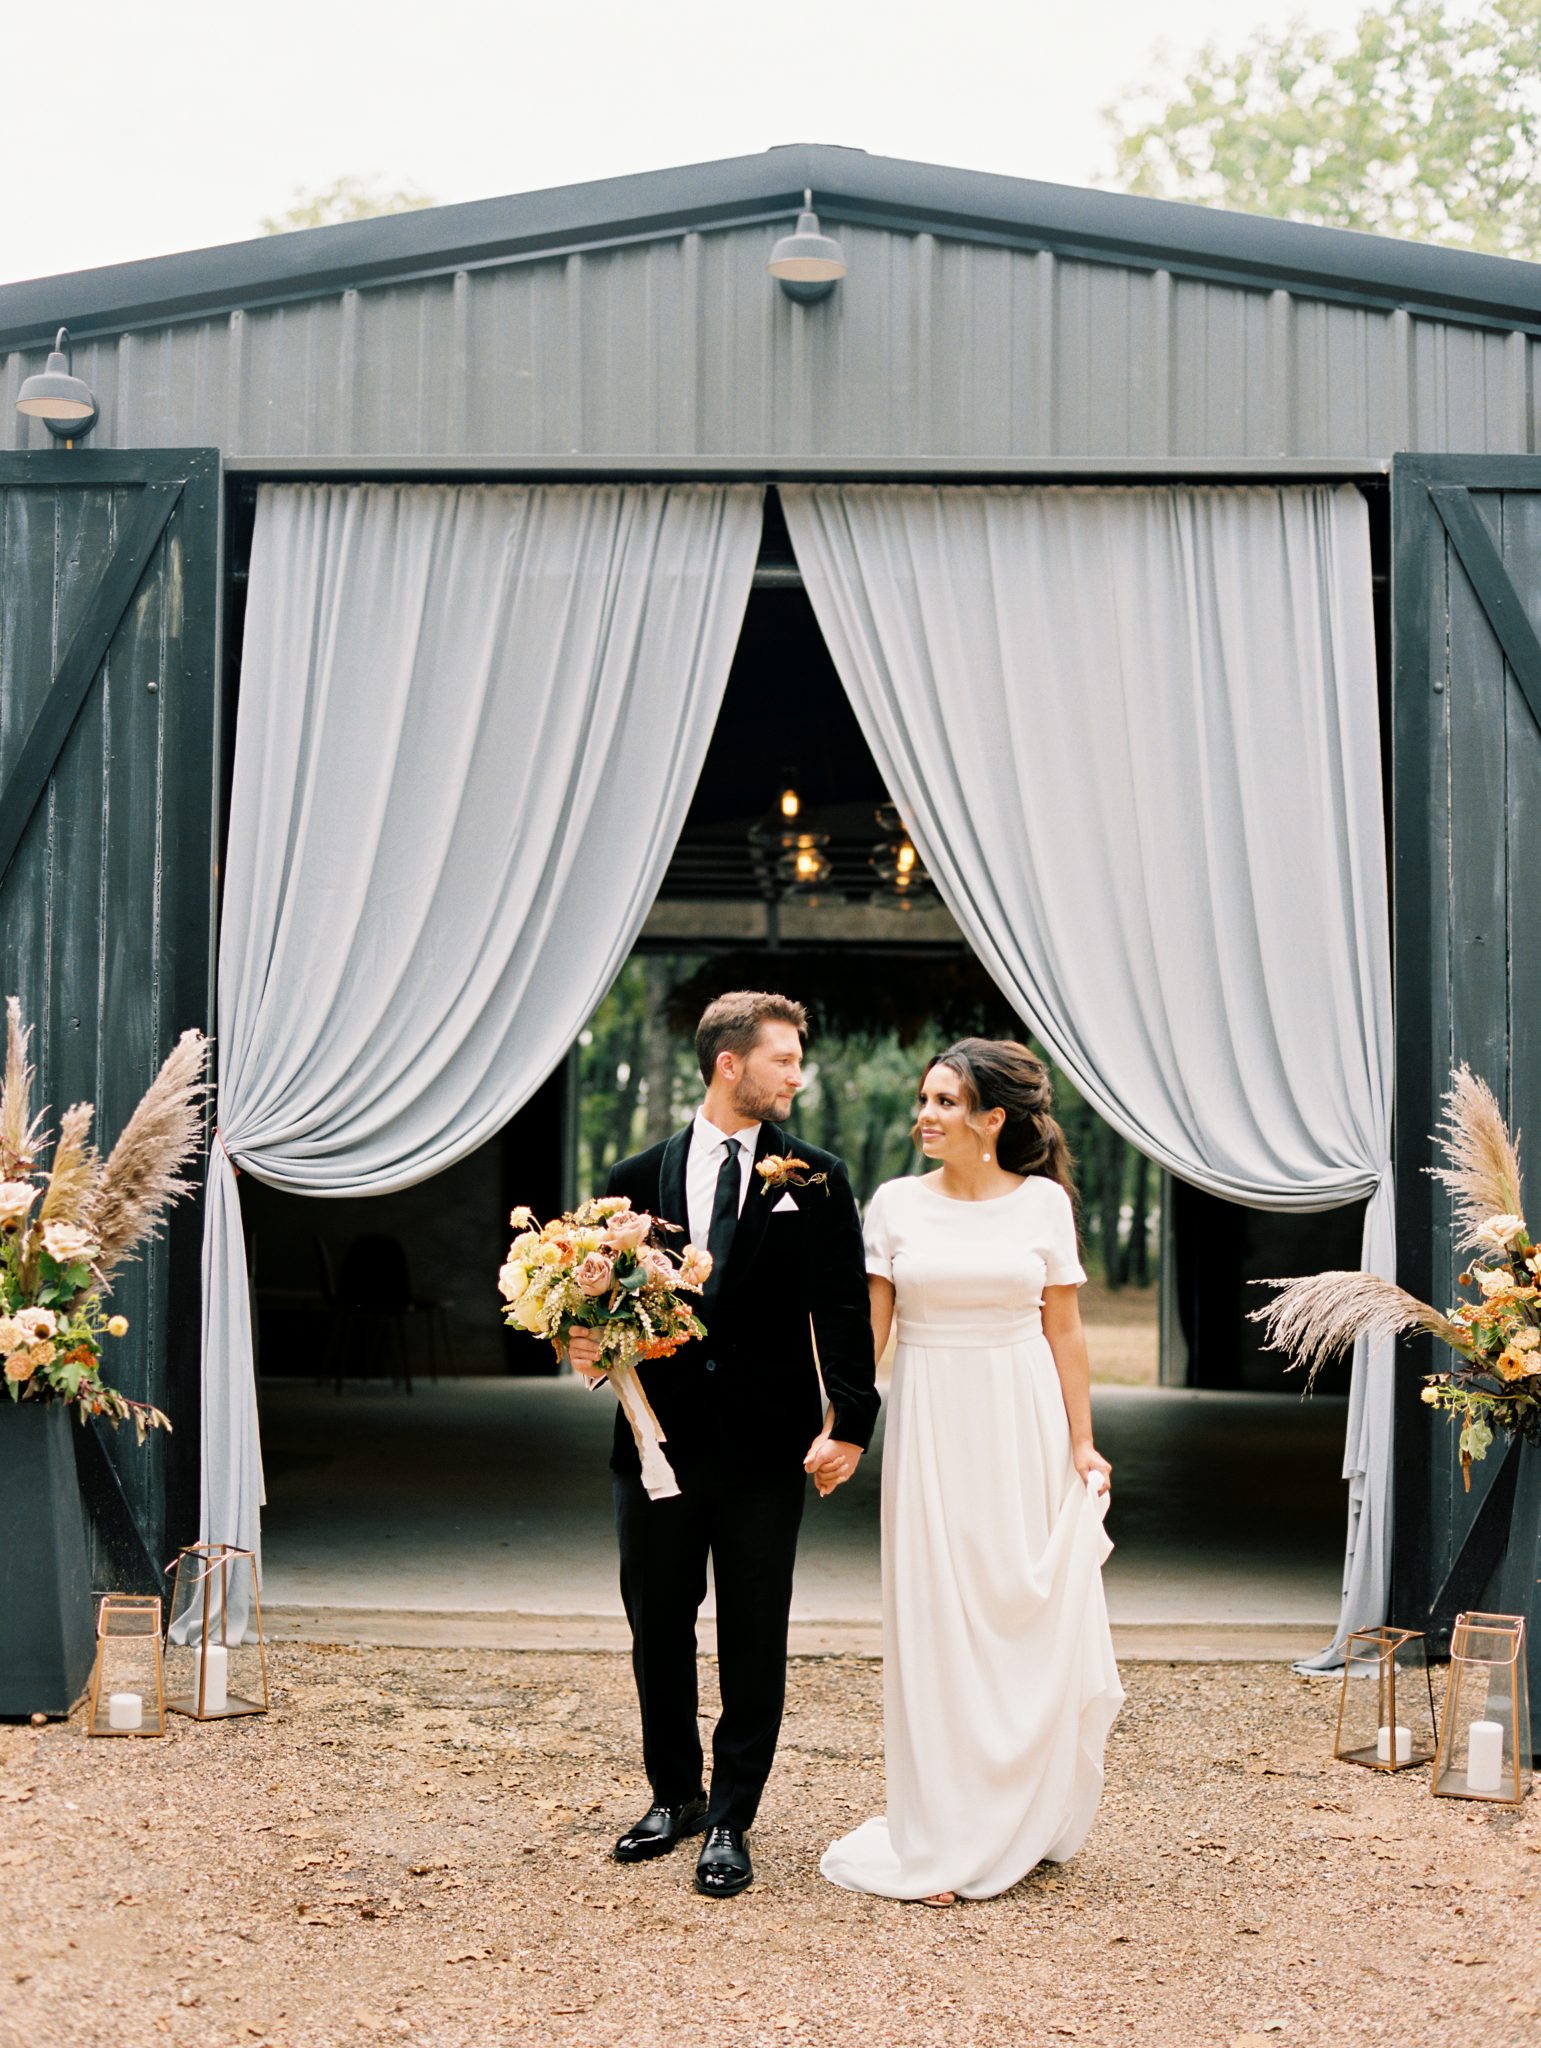 Country wedding venue ideas in DFW, Texas